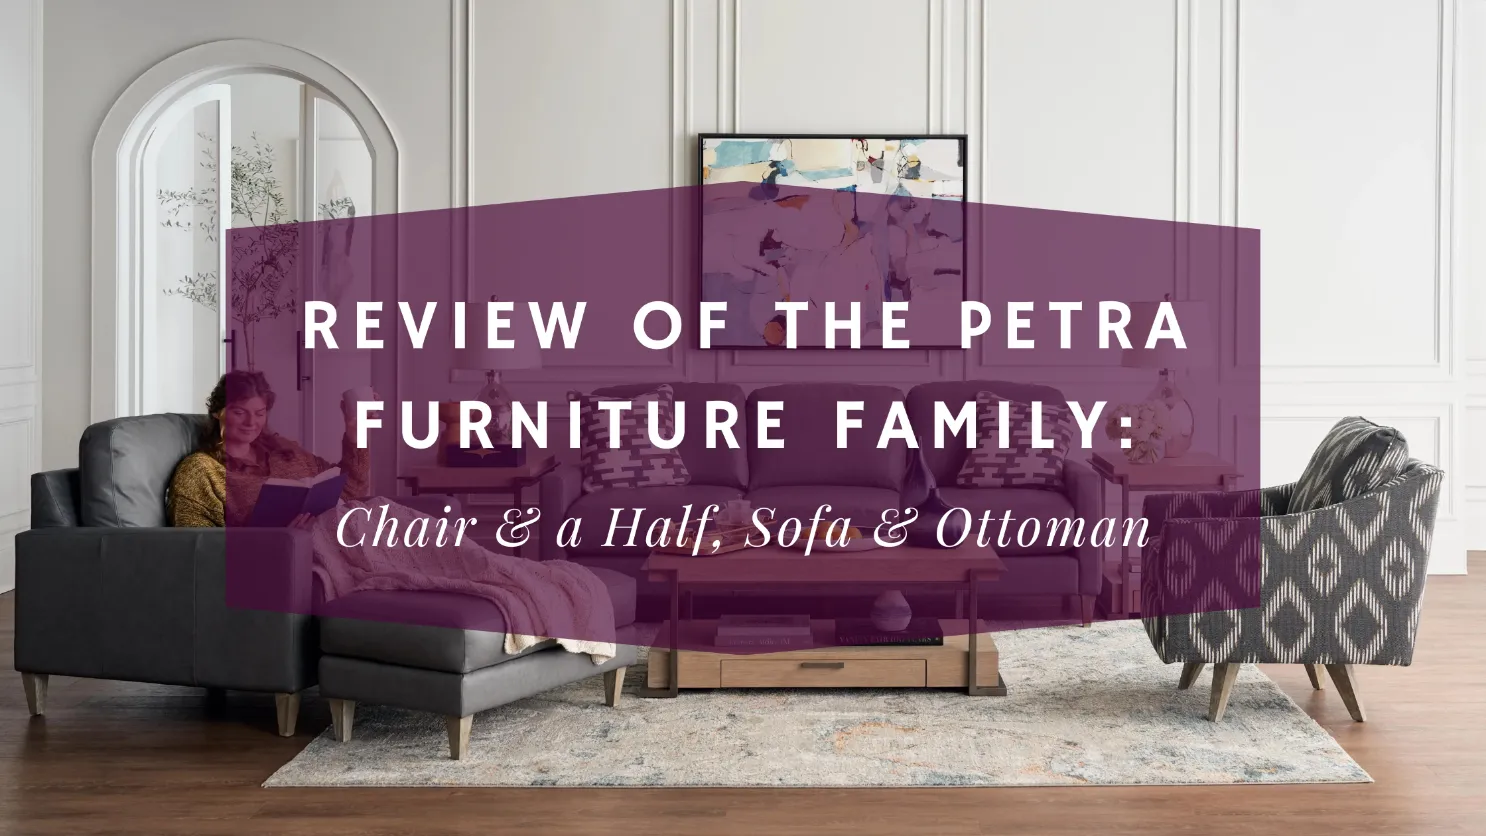 Review of La-Z-Boy’s Petra Furniture Family: Chair & a Half, Sofa & Ottoman